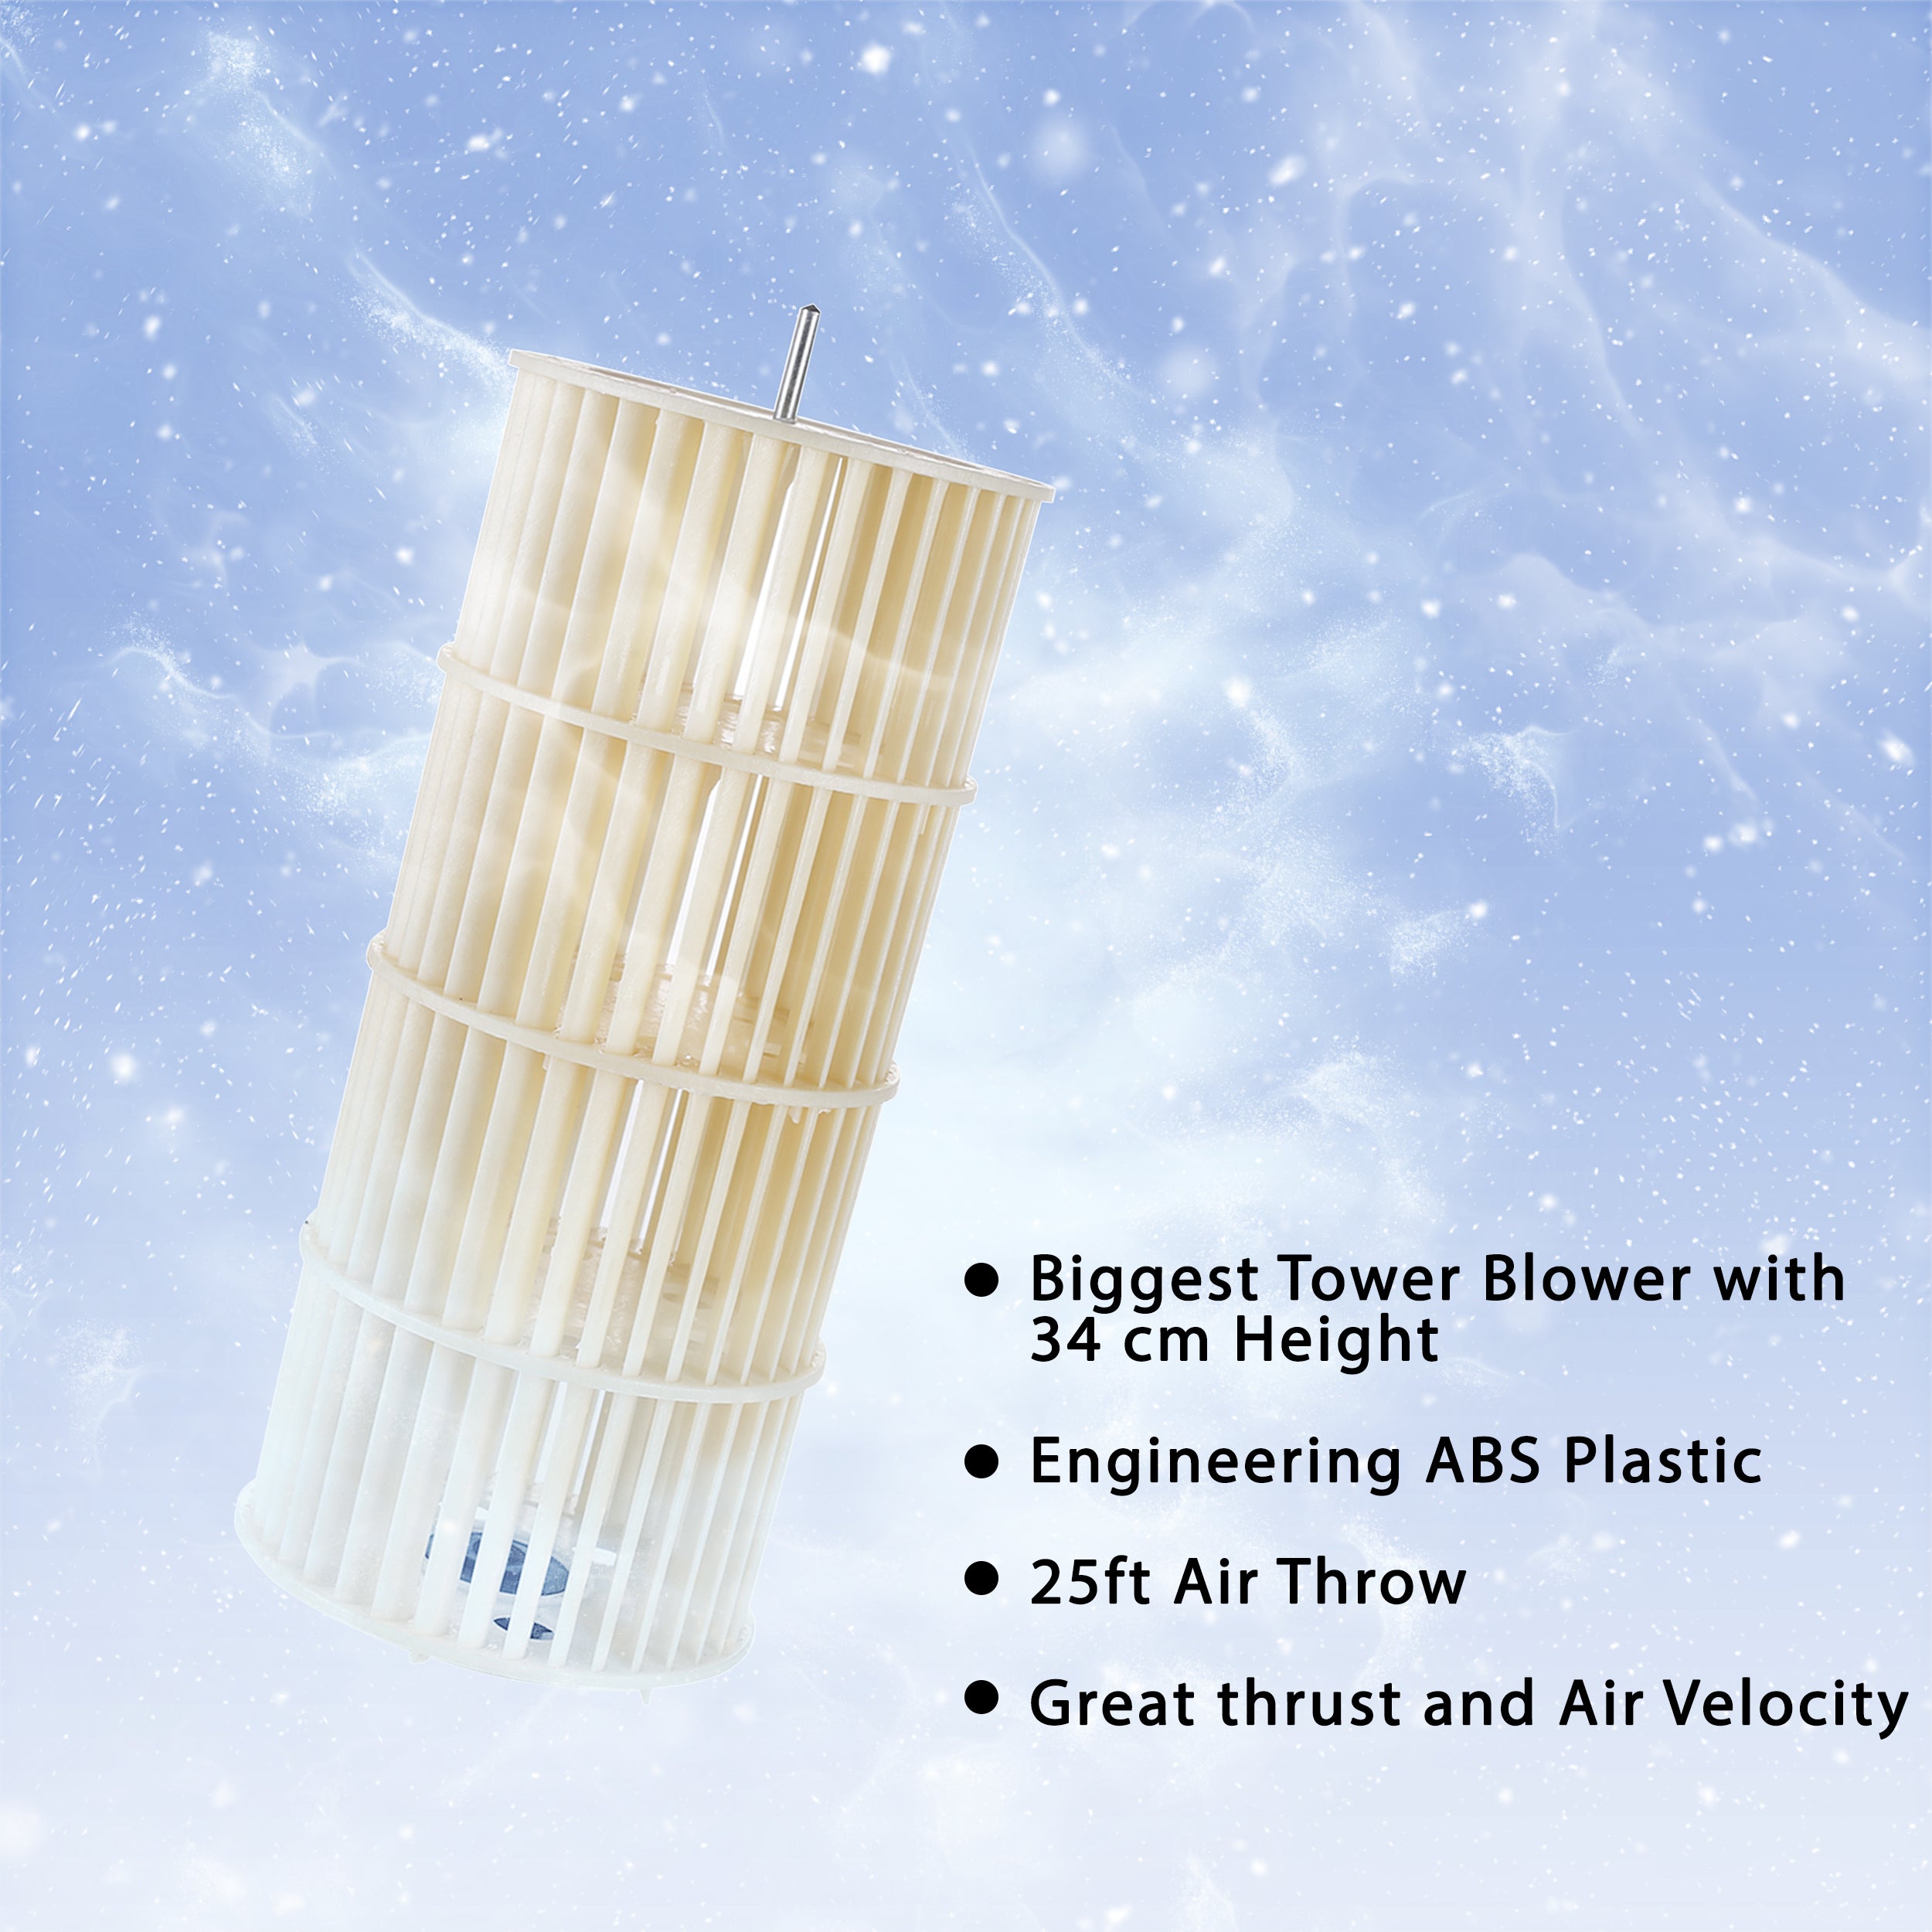 HAVAI Bullet XL Tower Air Cooler - 34 Liter, White